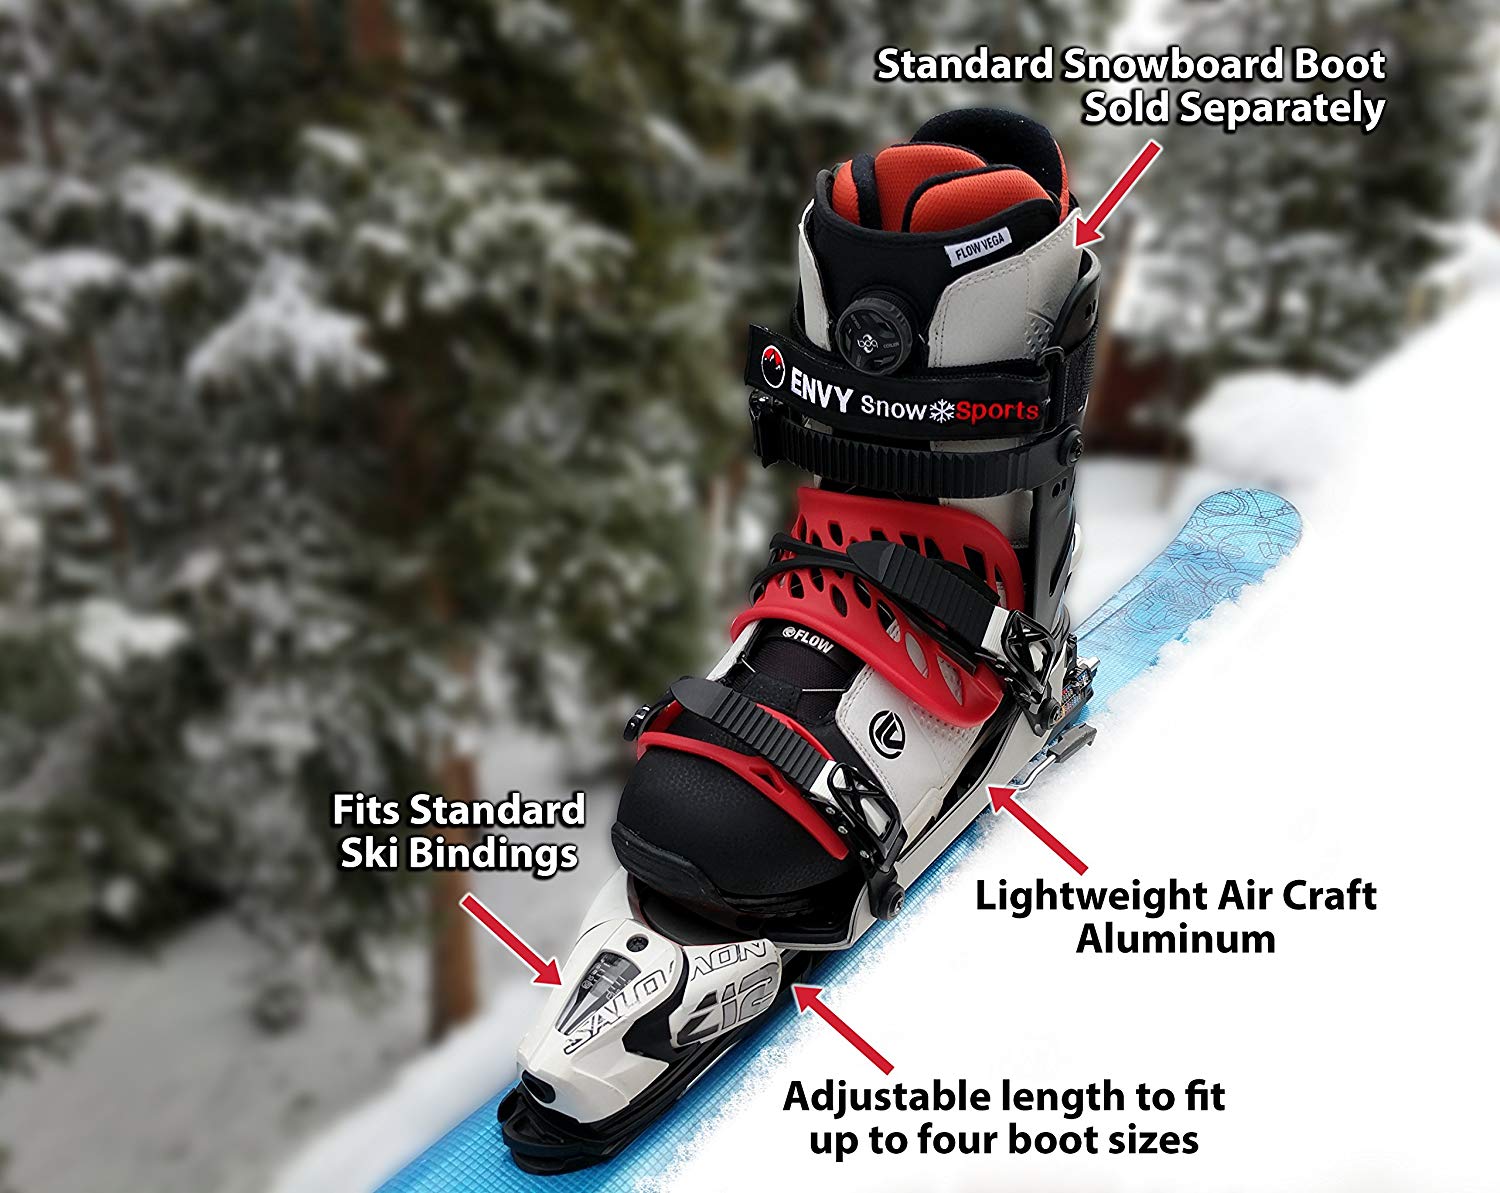 Envy Ski Boot Frame – Comfortable Ski Boots